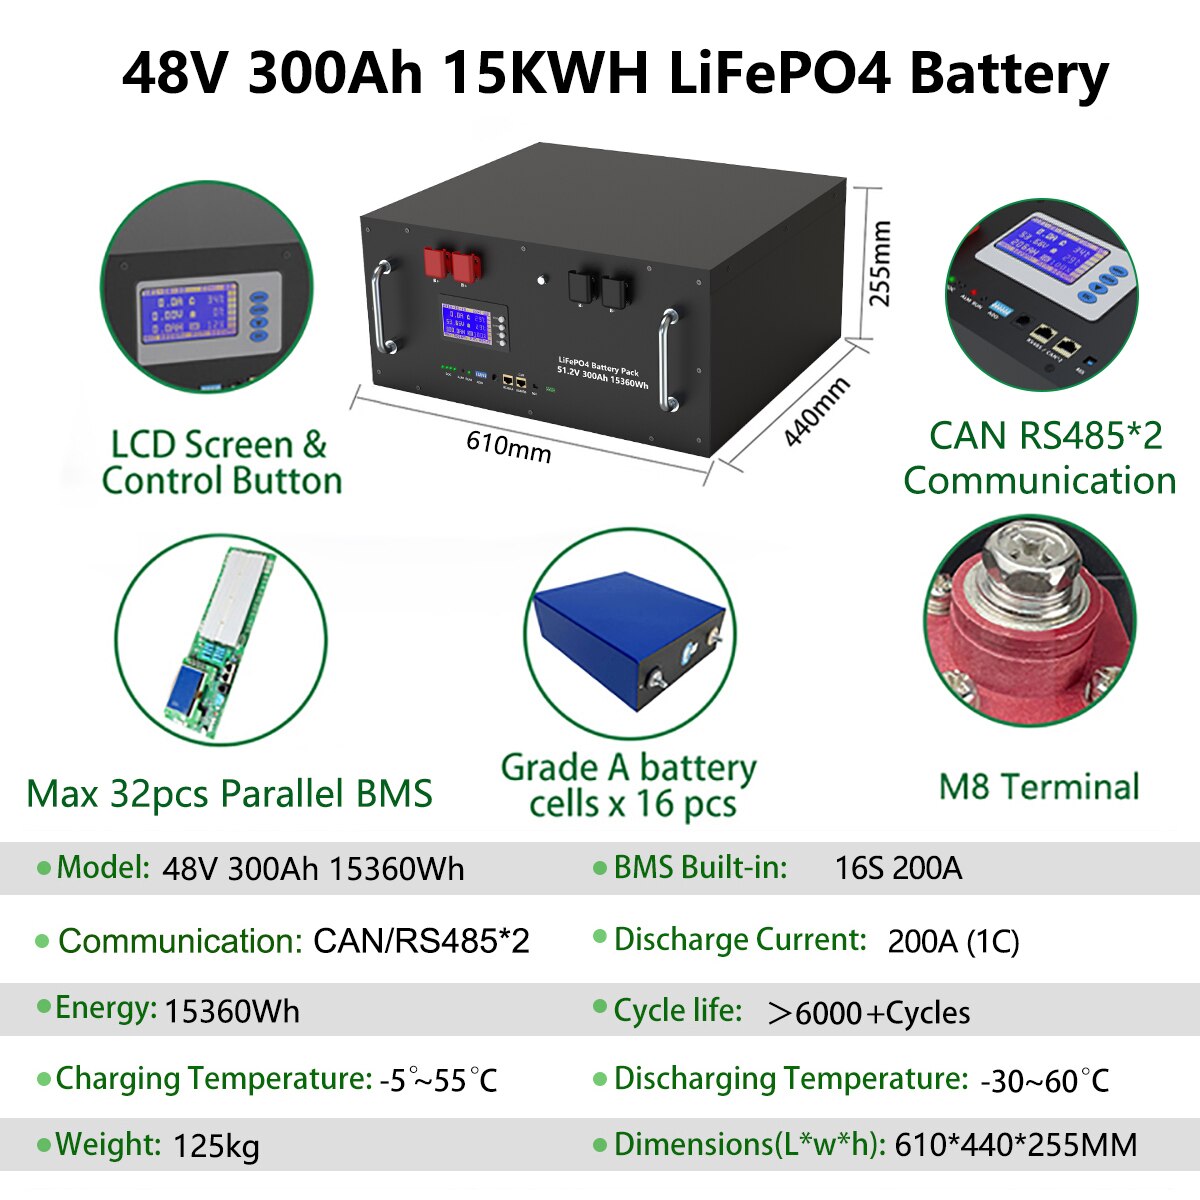 LiFePO4 48V 200AH 10KW Batteriepack - Lithium-Solarbatterie 6000+ Zyklen RS485 CAN-Bus max. 32 parallel für Wechselrichter LiFePO4 200AH